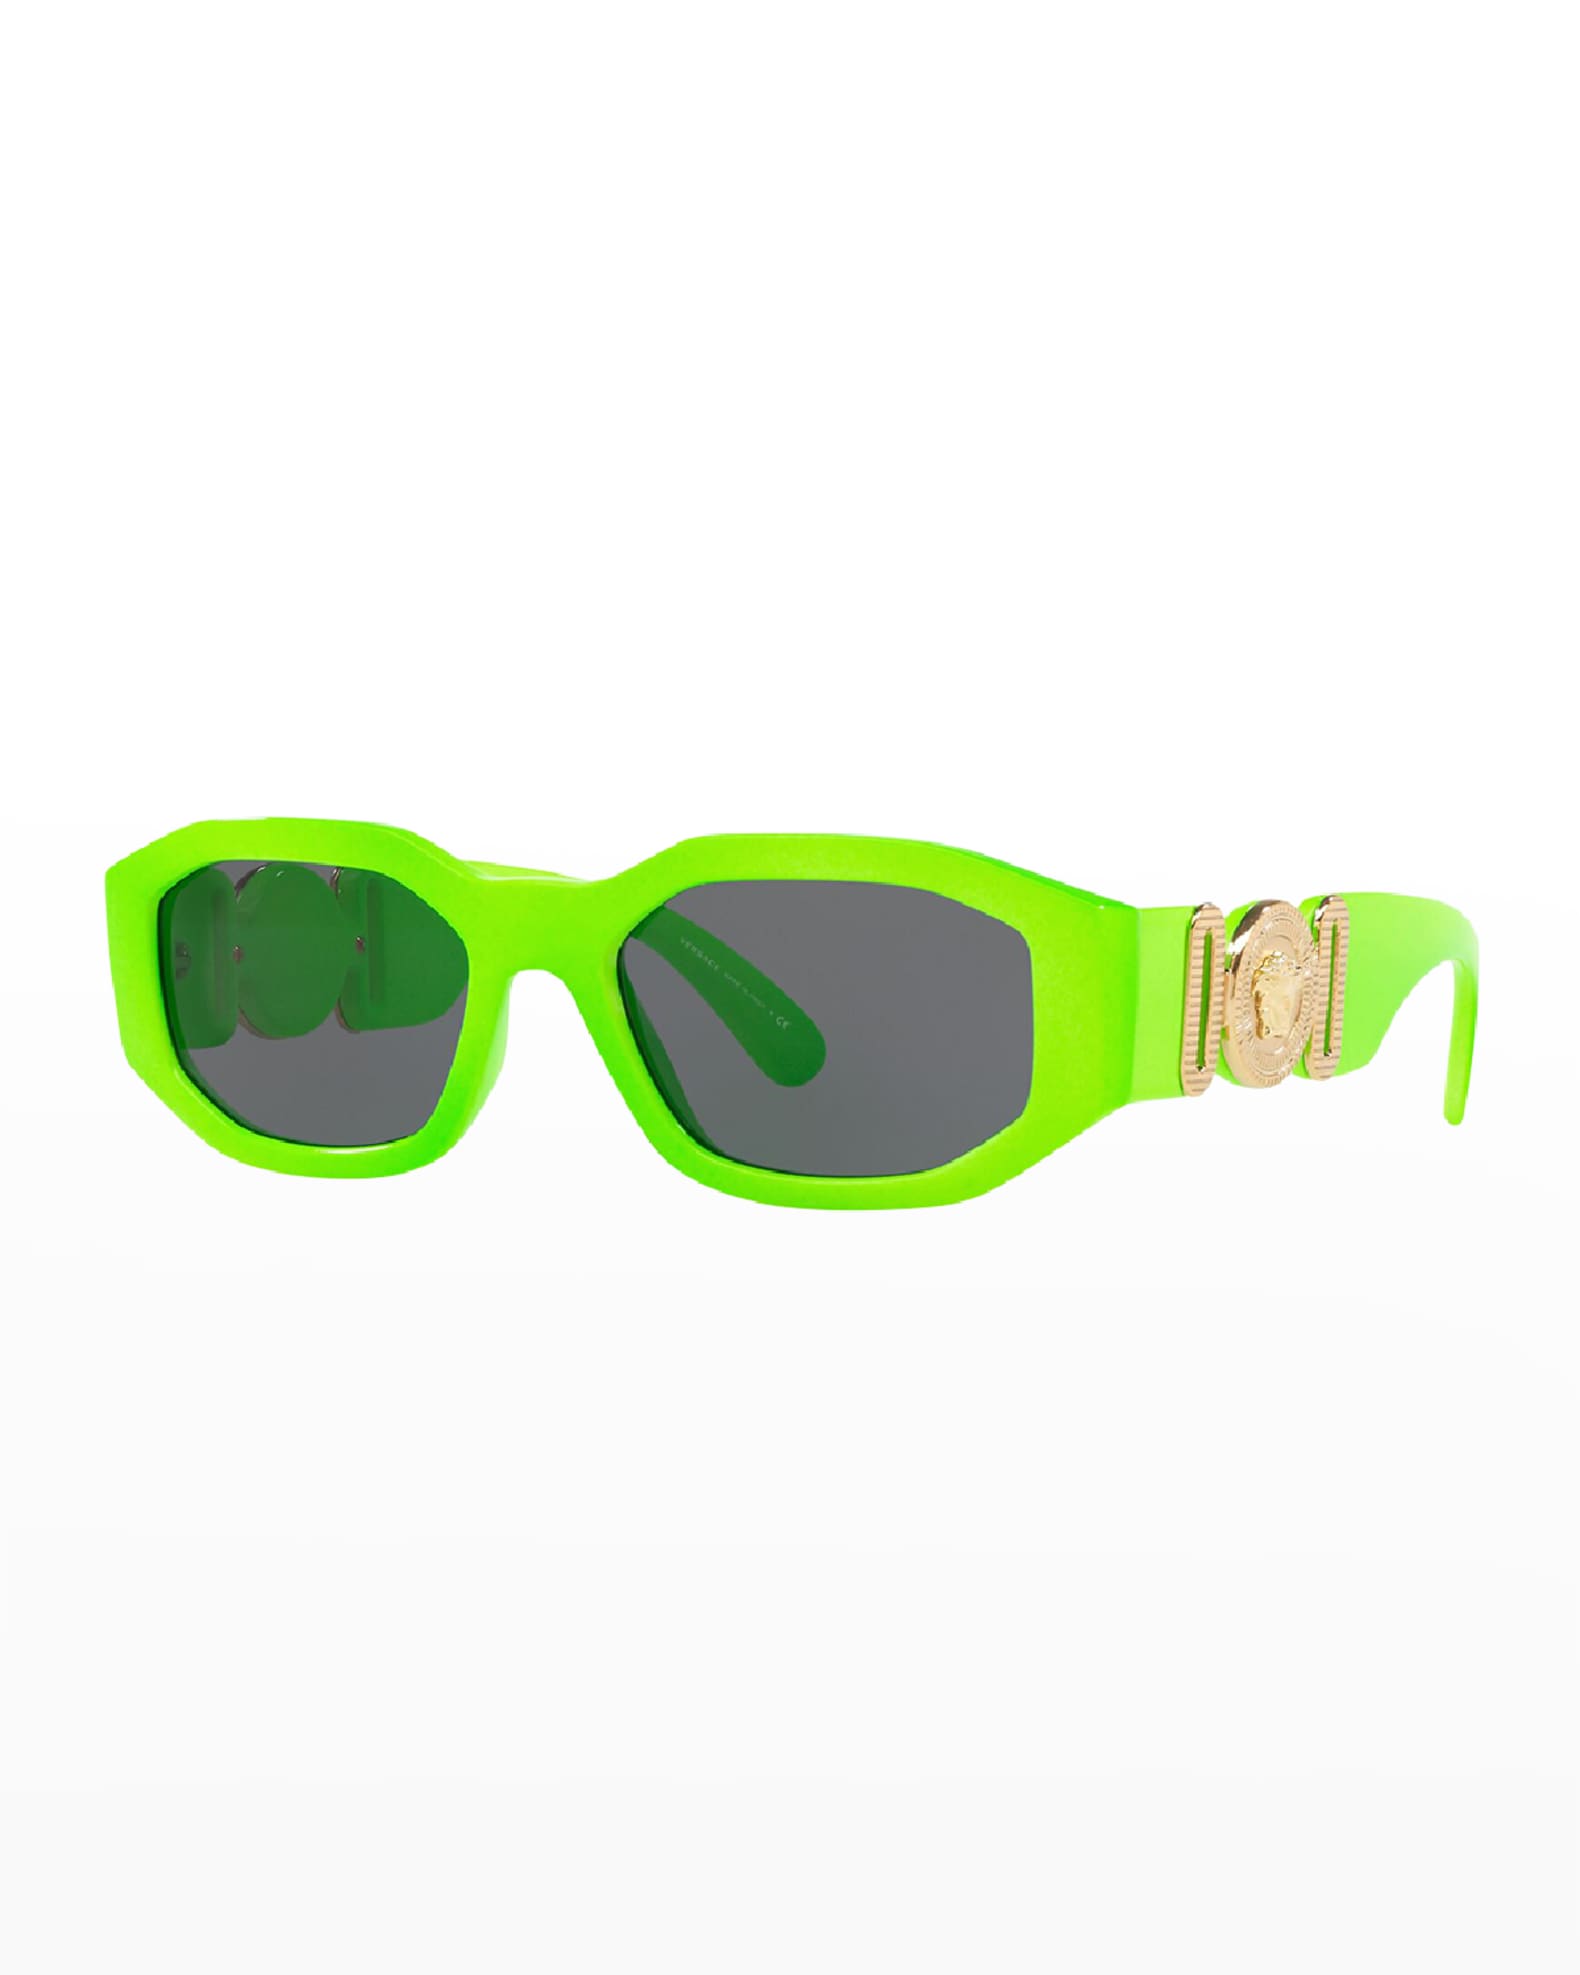 Versace Men's Geometric Propionate Sunglasses | Neiman Marcus